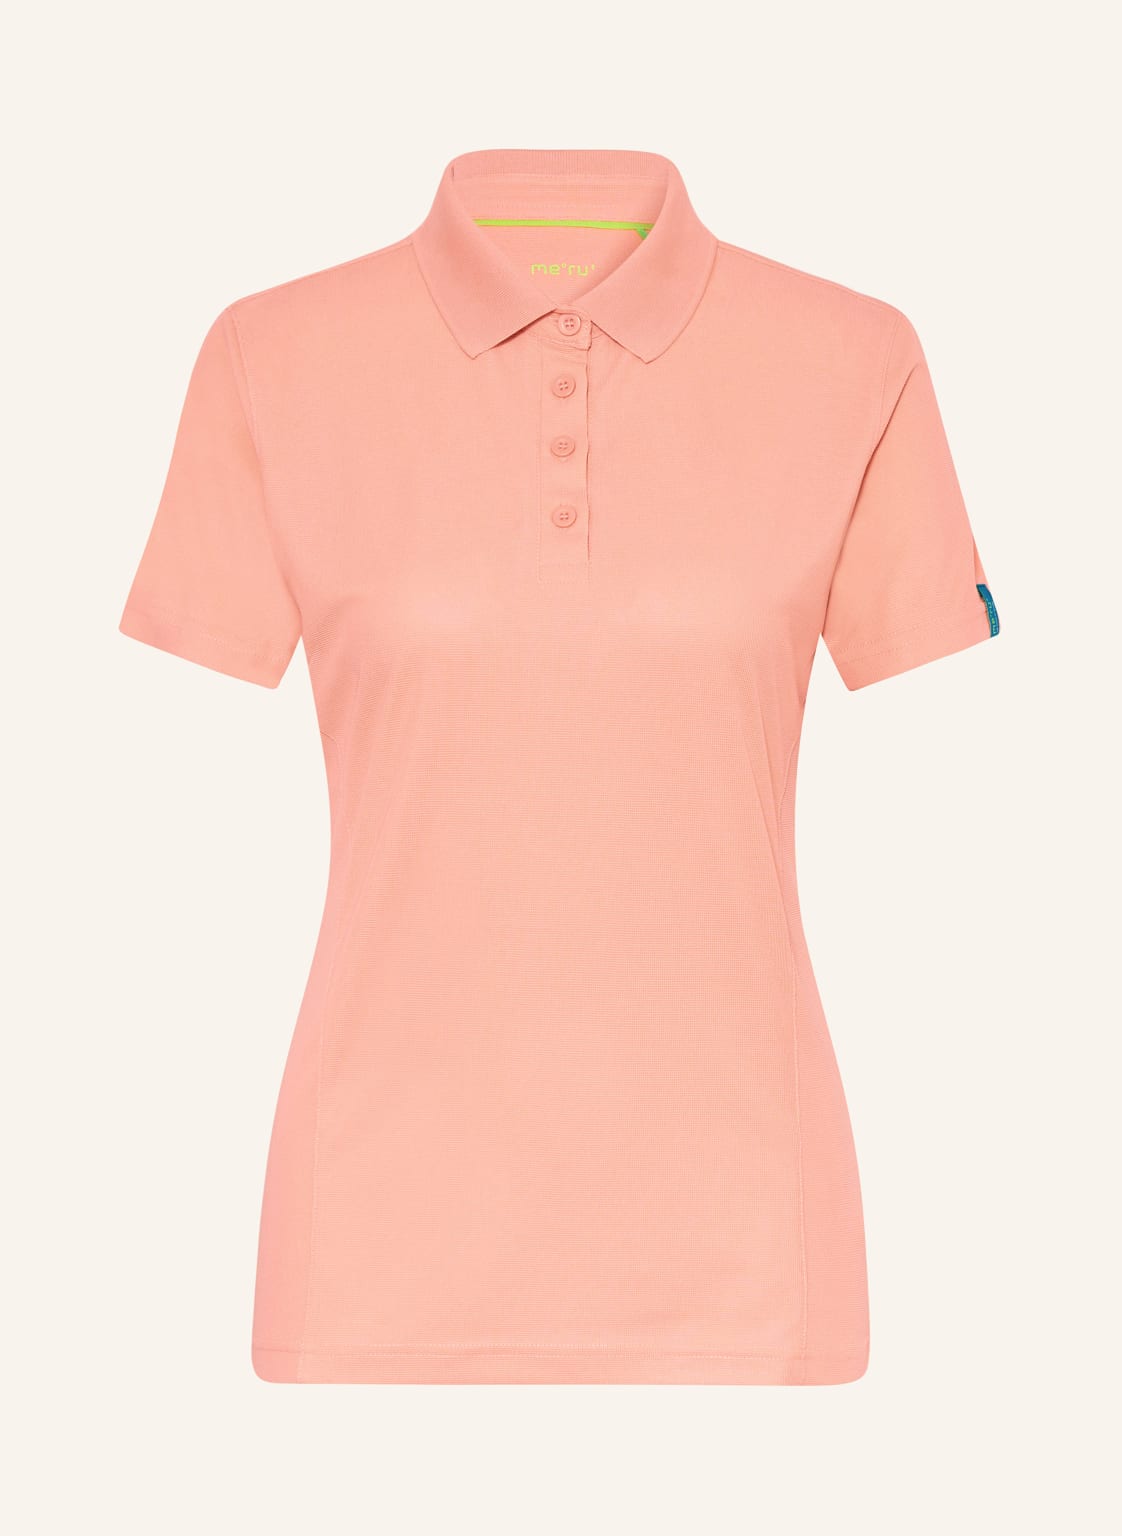 Me°Ru' Funktions-Poloshirt Bristol rosa von me°ru'